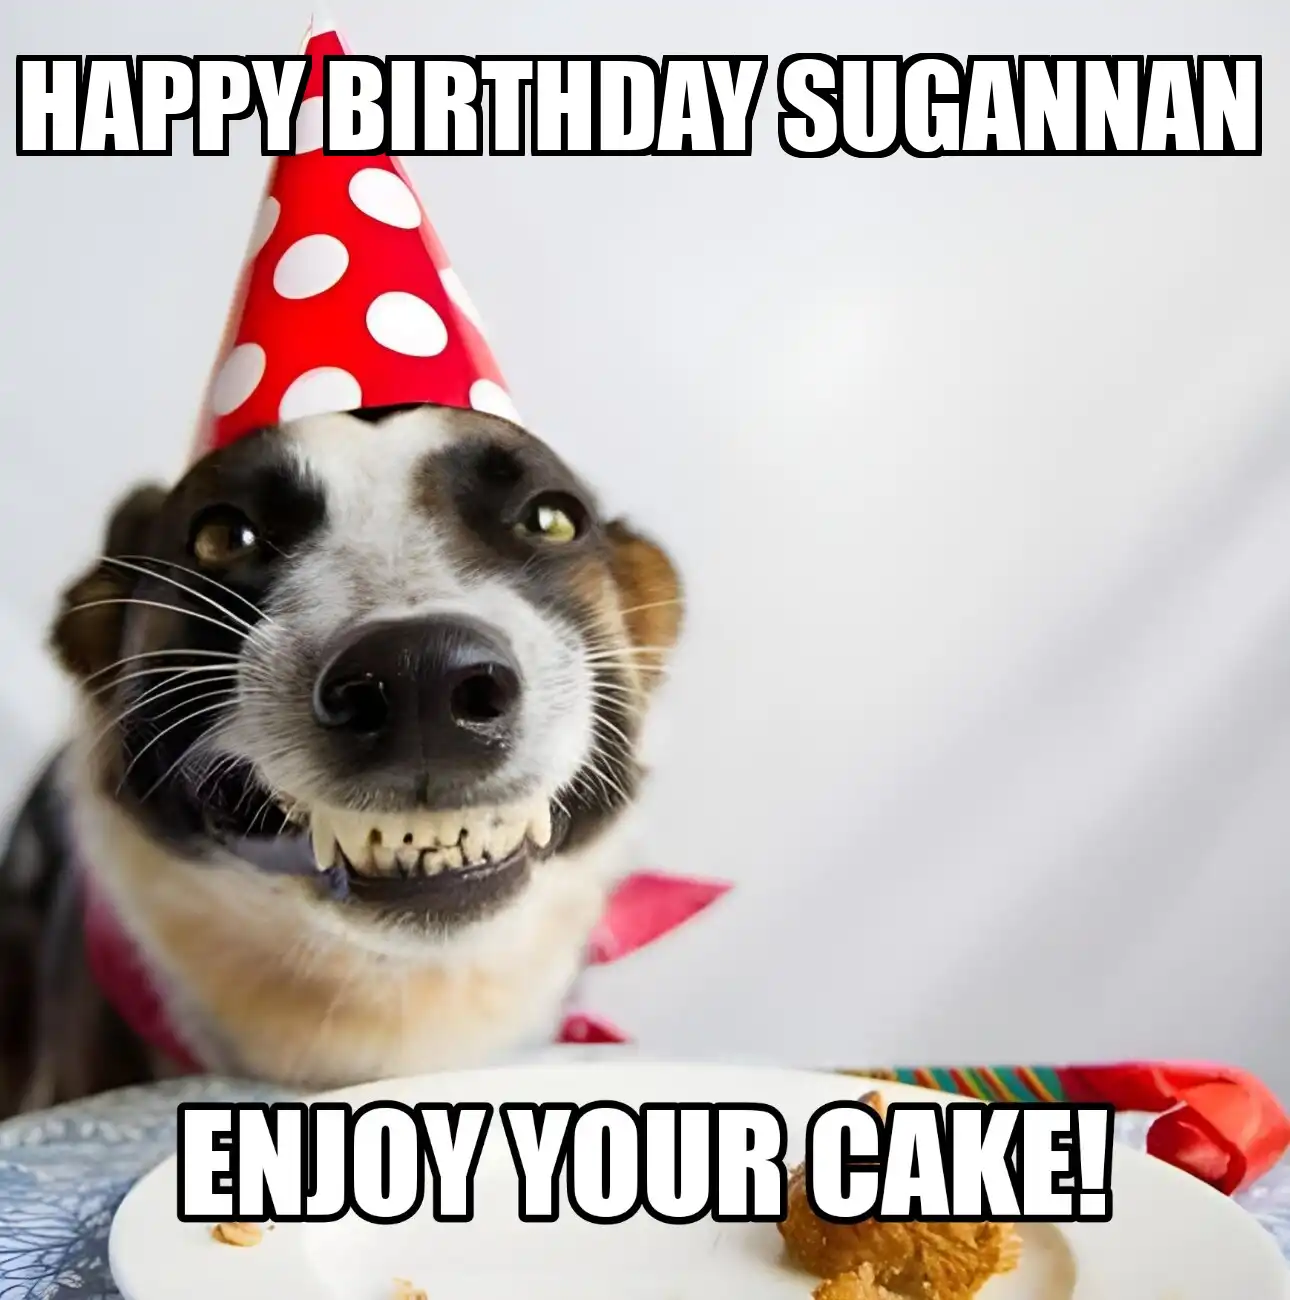 Happy Birthday Sugannan Enjoy Your Cake Dog Meme